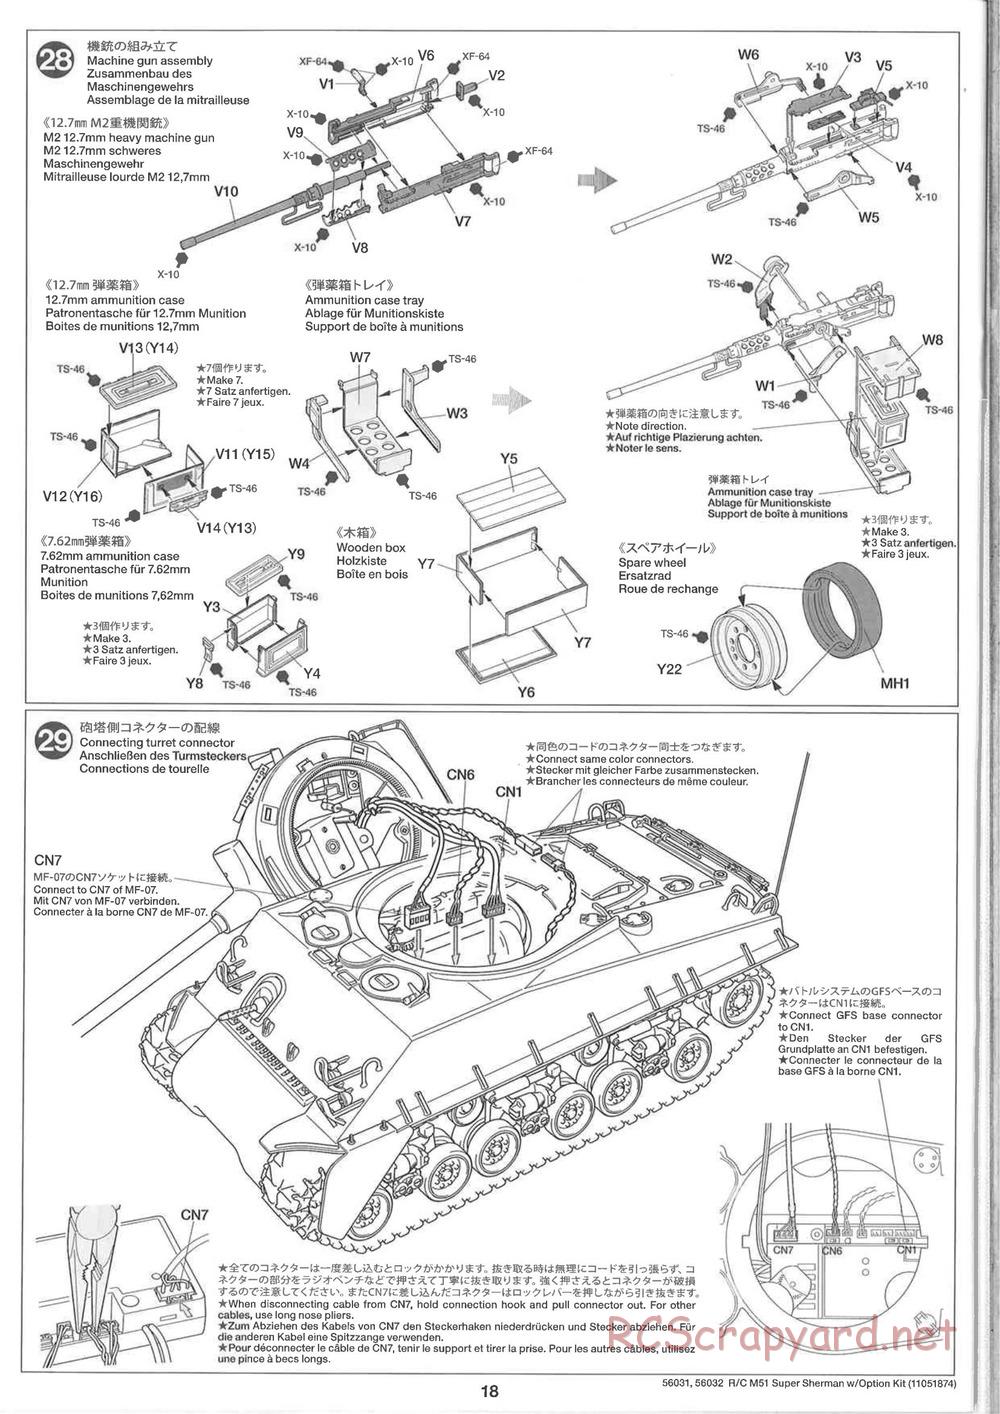 Tamiya - Super Sherman M-51 - 1/16 Scale Chassis - Manual - Page 18